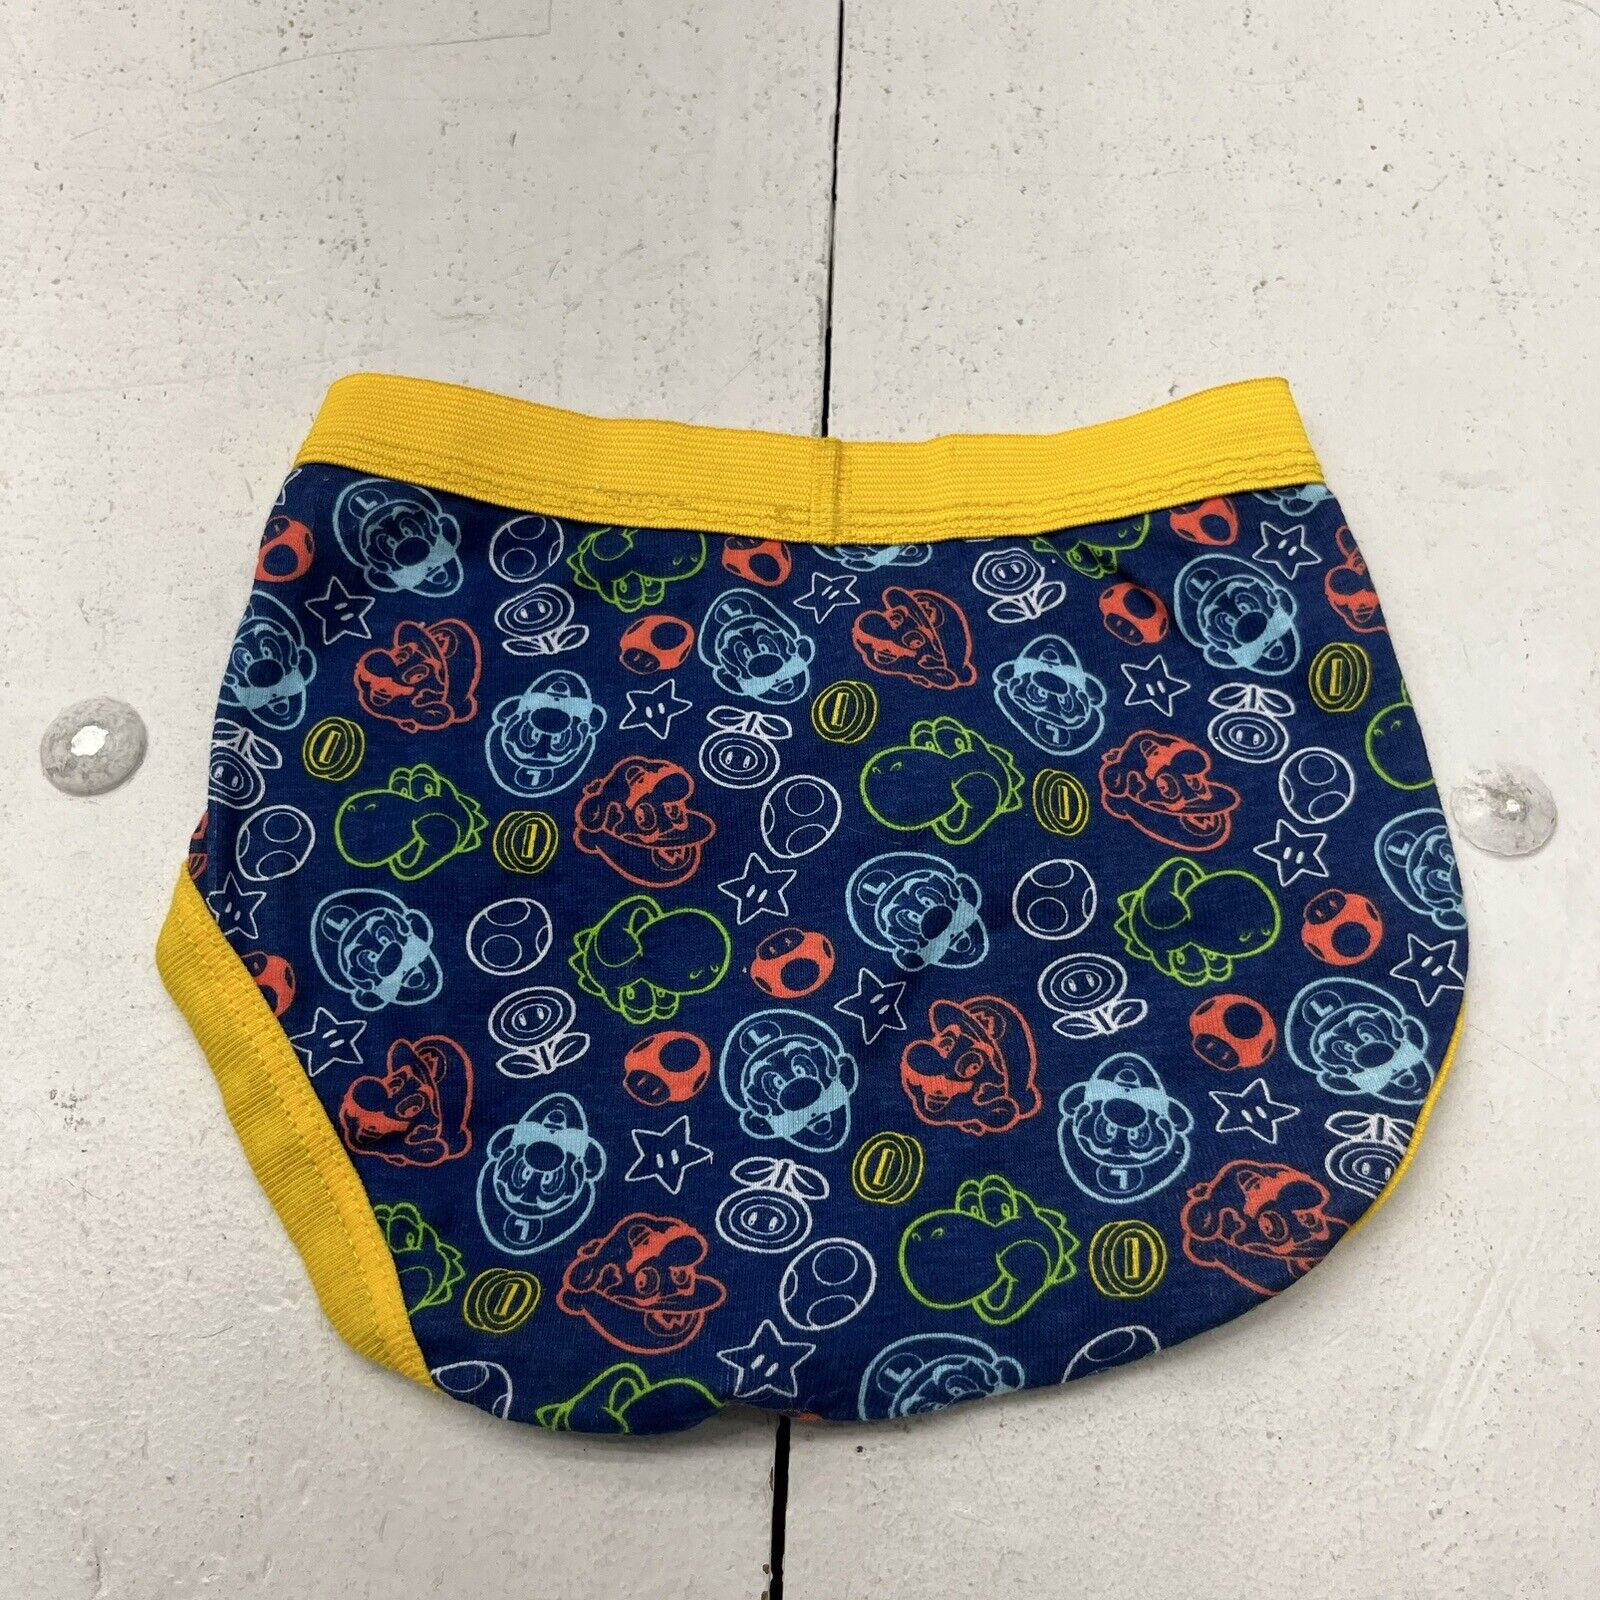 Super Mario Blue & Yellow Printed Underwear Boys Size 4 NEW